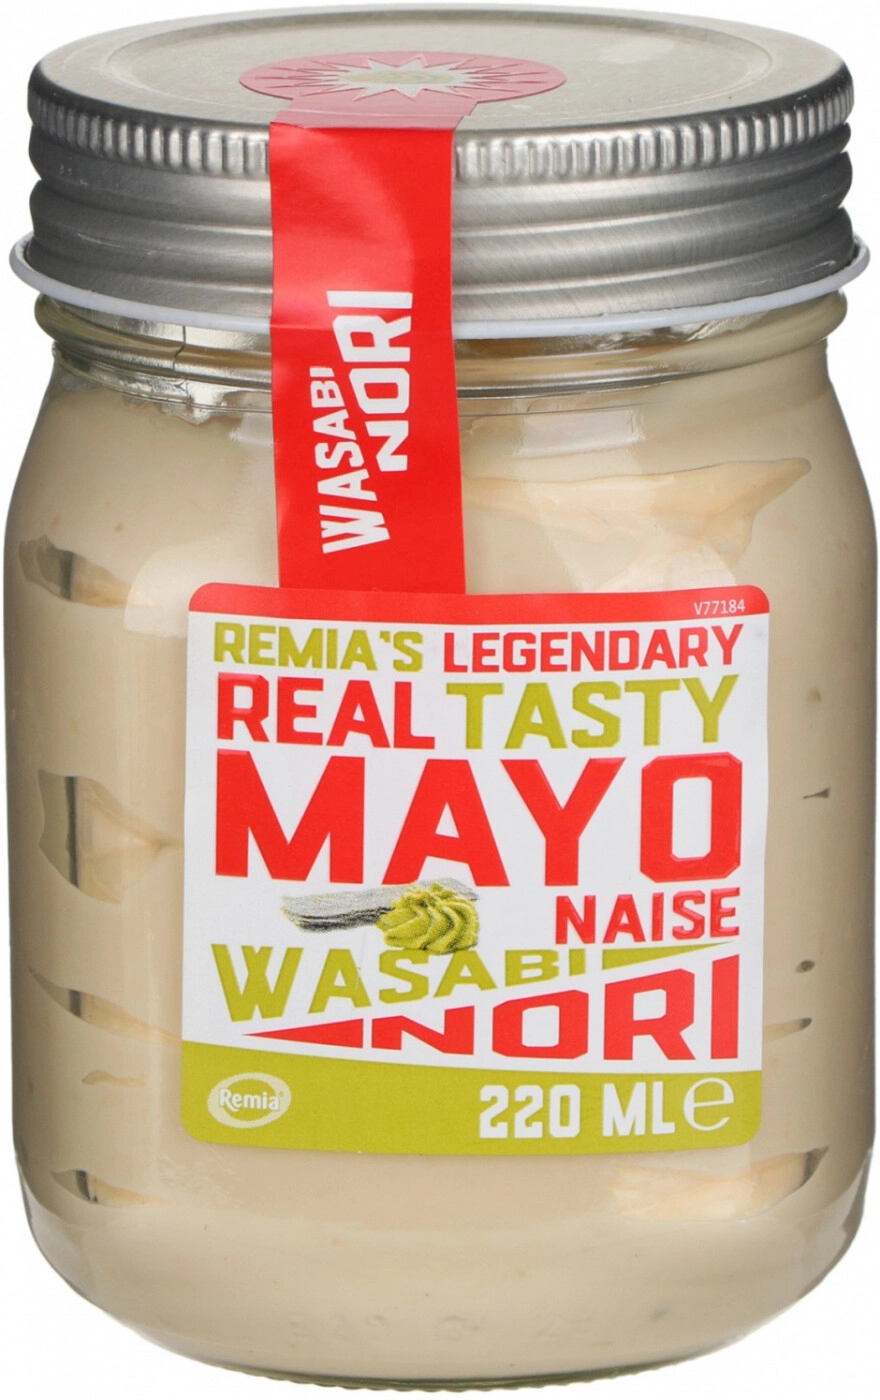 La mayonnaise Legendary Real Tasty Mayonaise de Remia